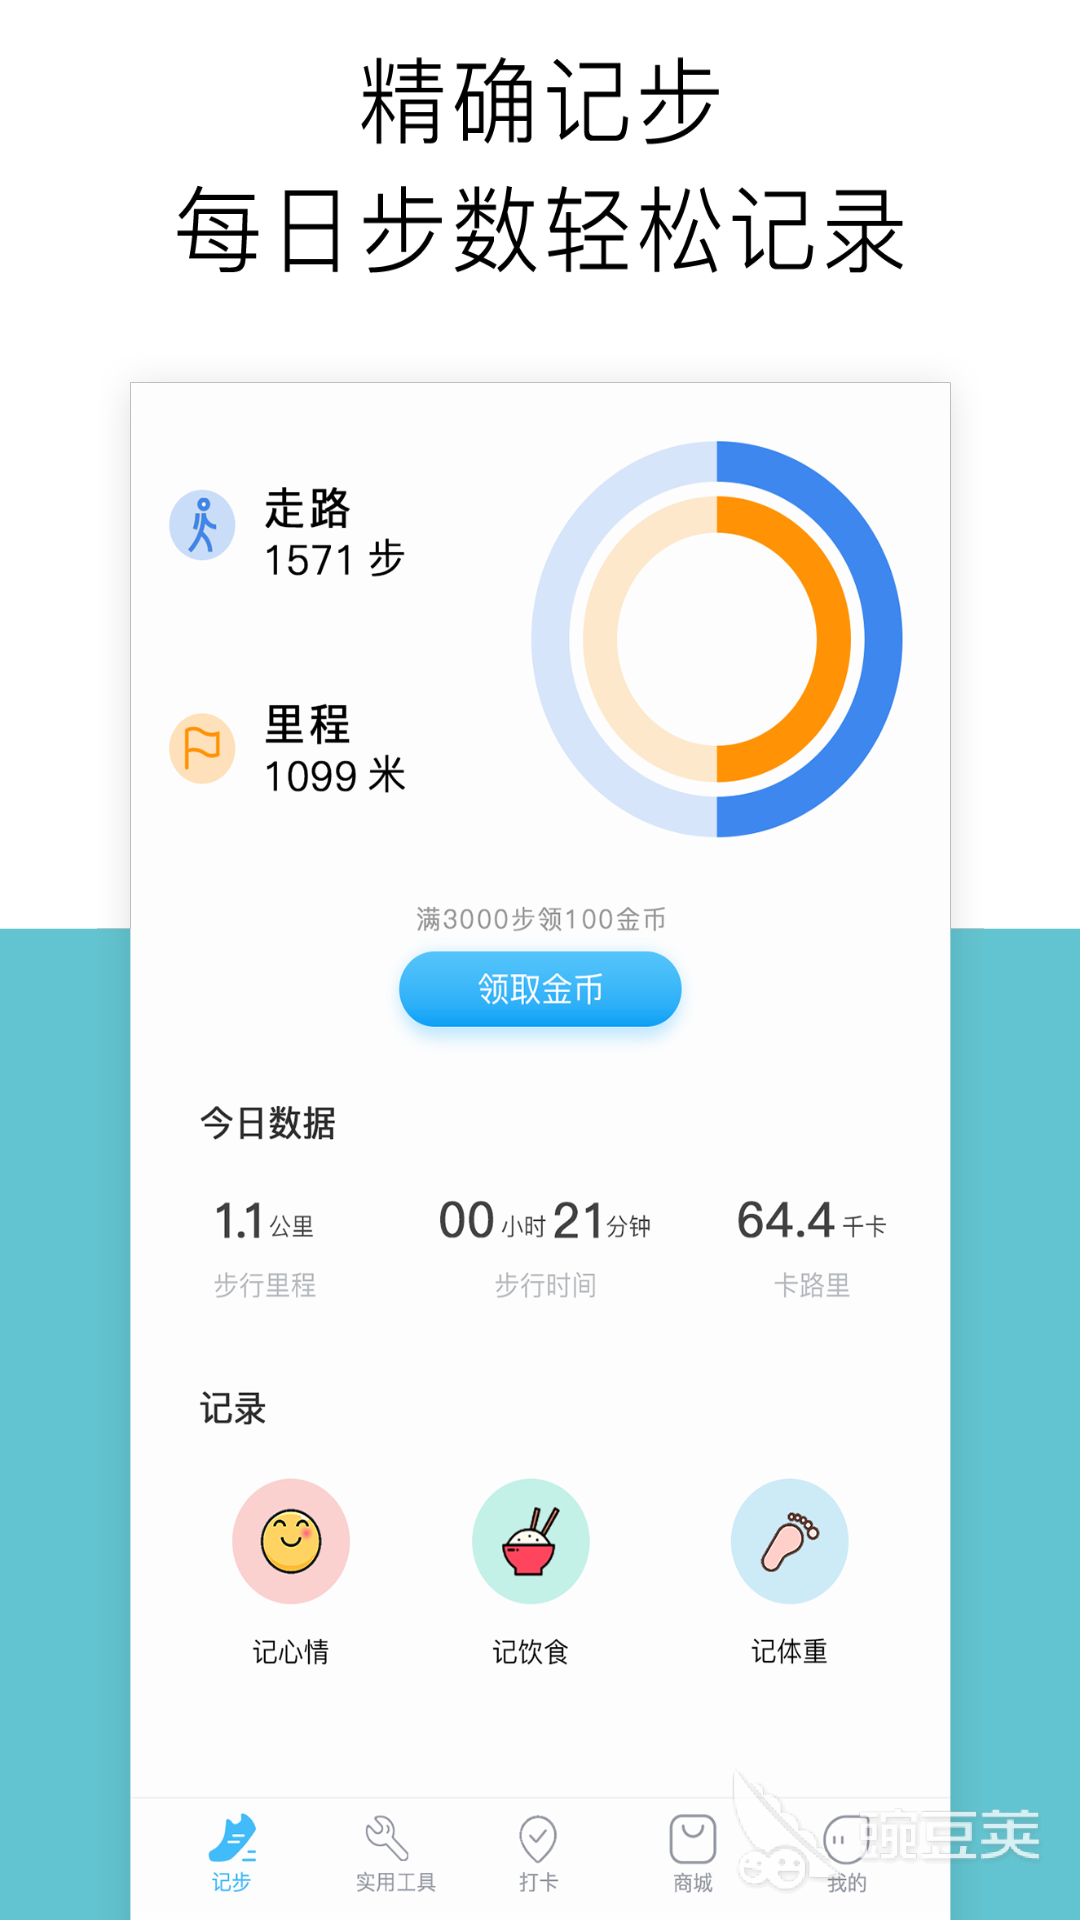 aoa体育官方网站手机记录跑步打卡公里数的app推荐 好用跑步打开软件(图1)